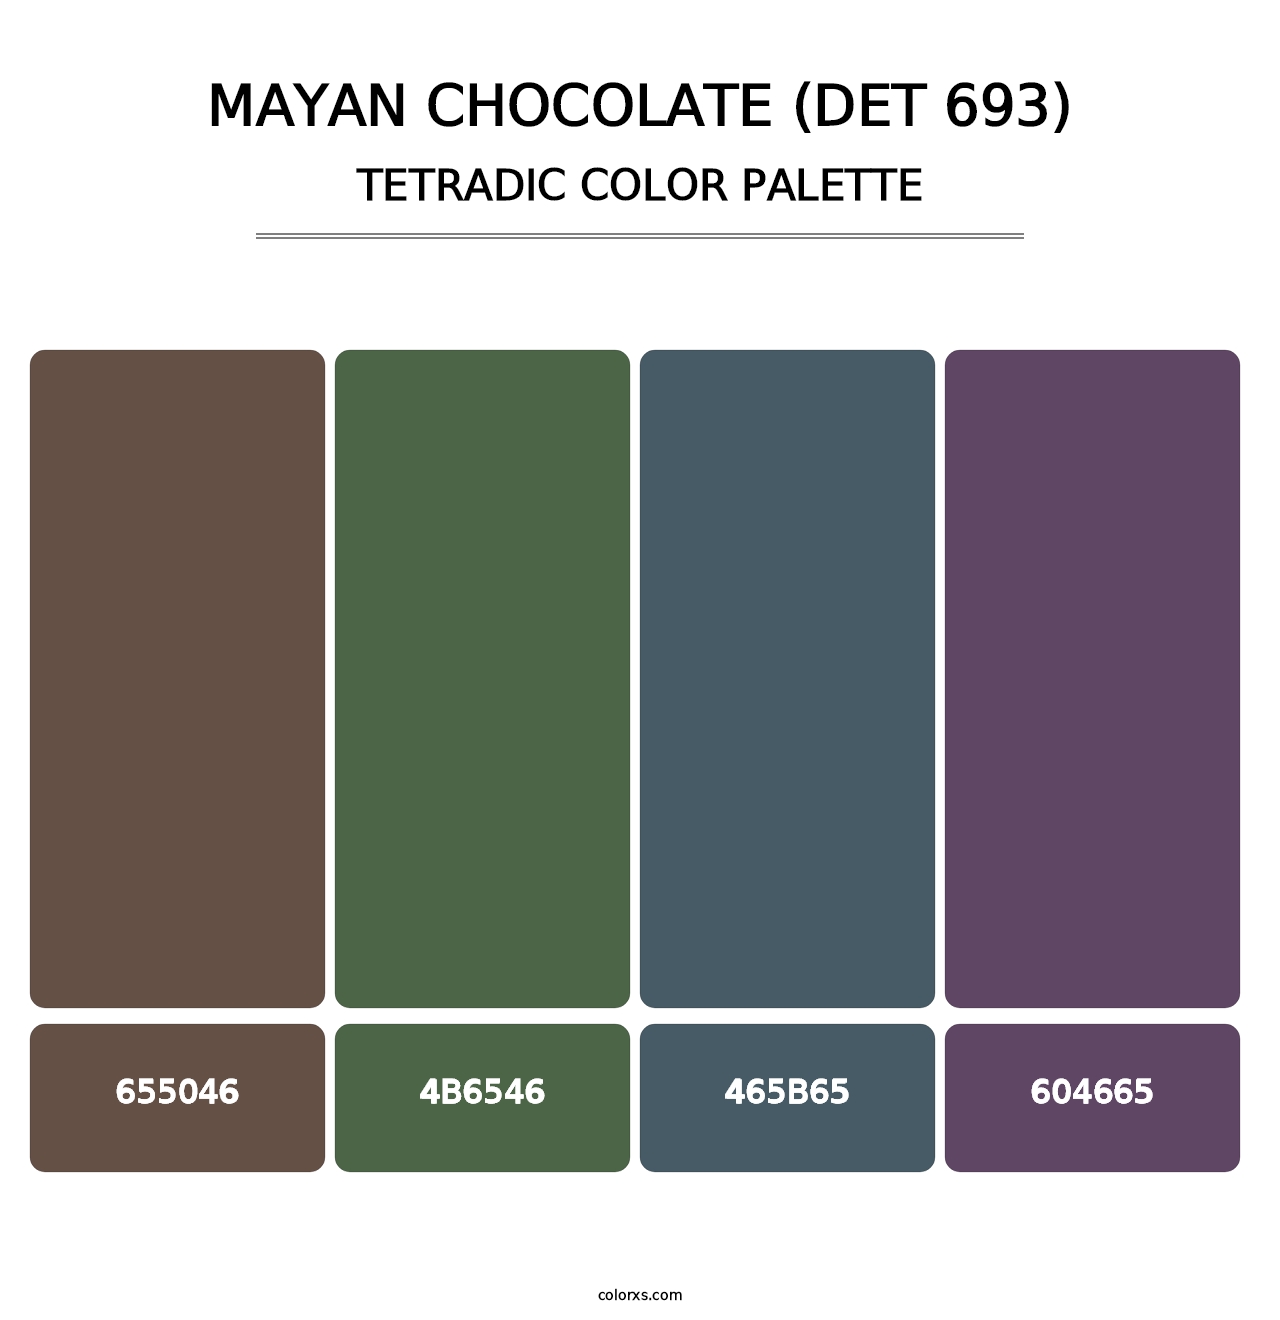 Mayan Chocolate (DET 693) - Tetradic Color Palette